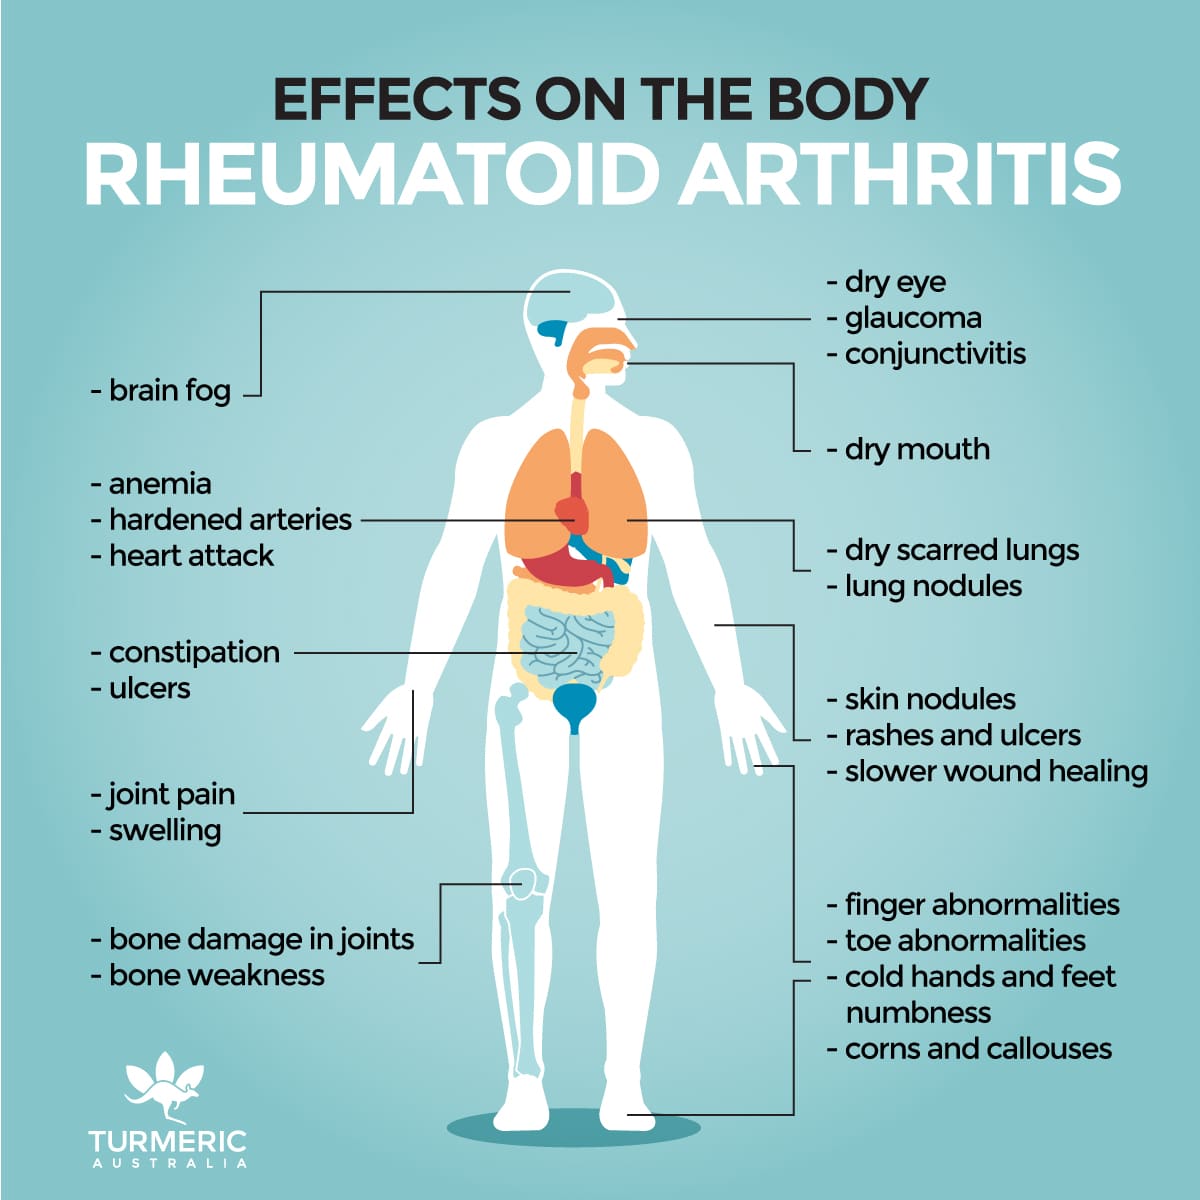 Rheumatoid Arthritis and Cancer: Whatâs the Connection?